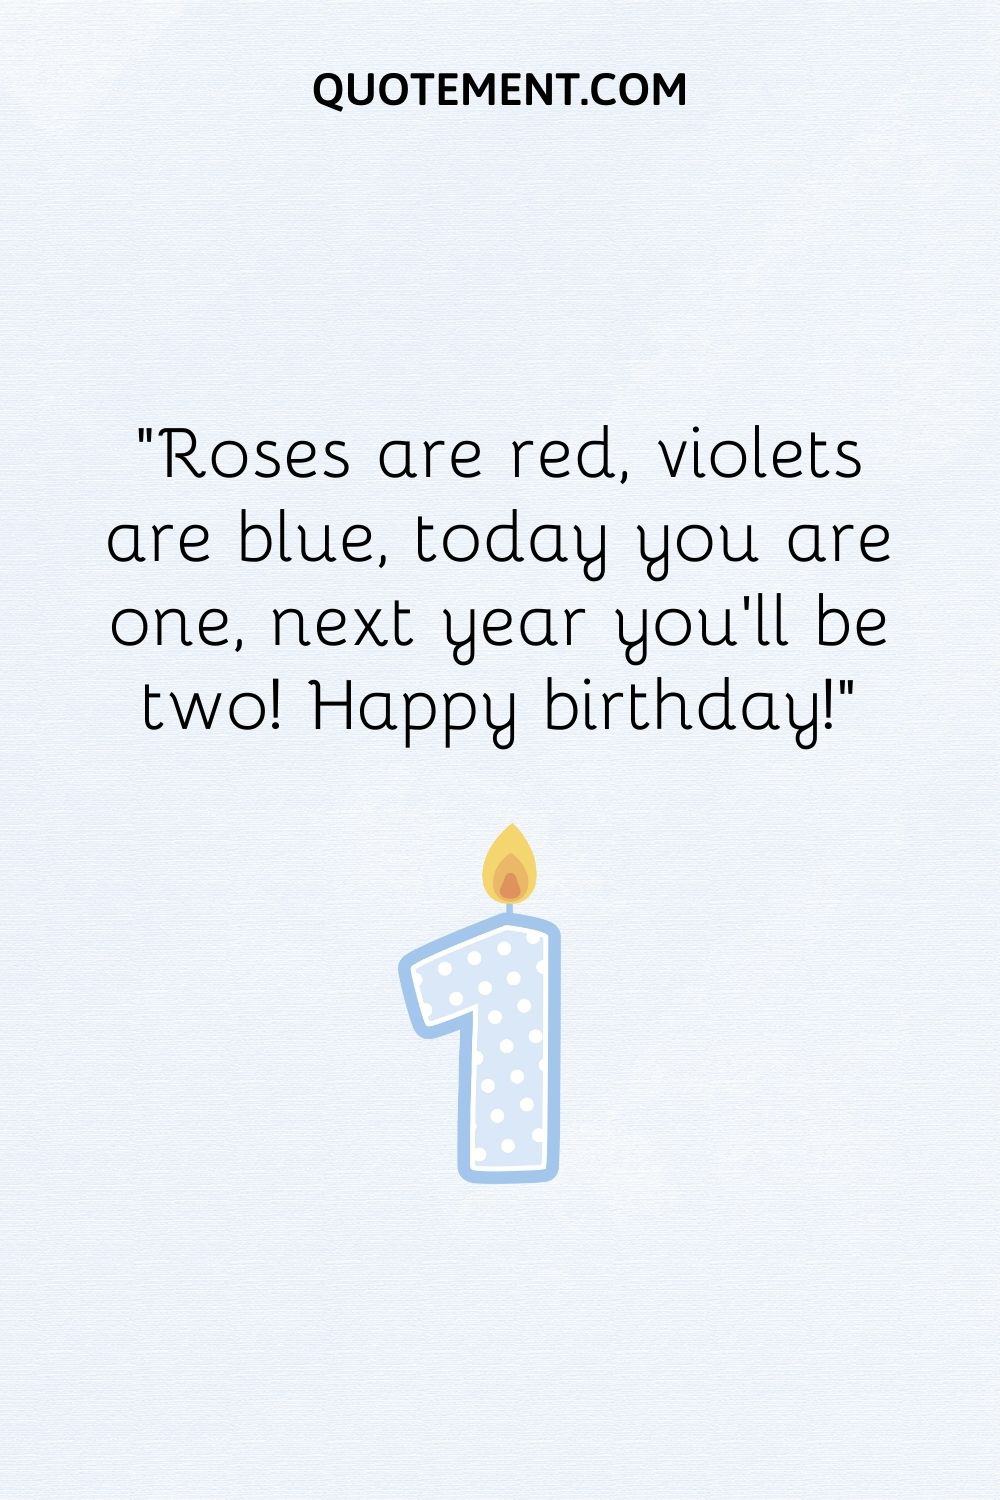 number one illustration representing happy 1st birthday wish